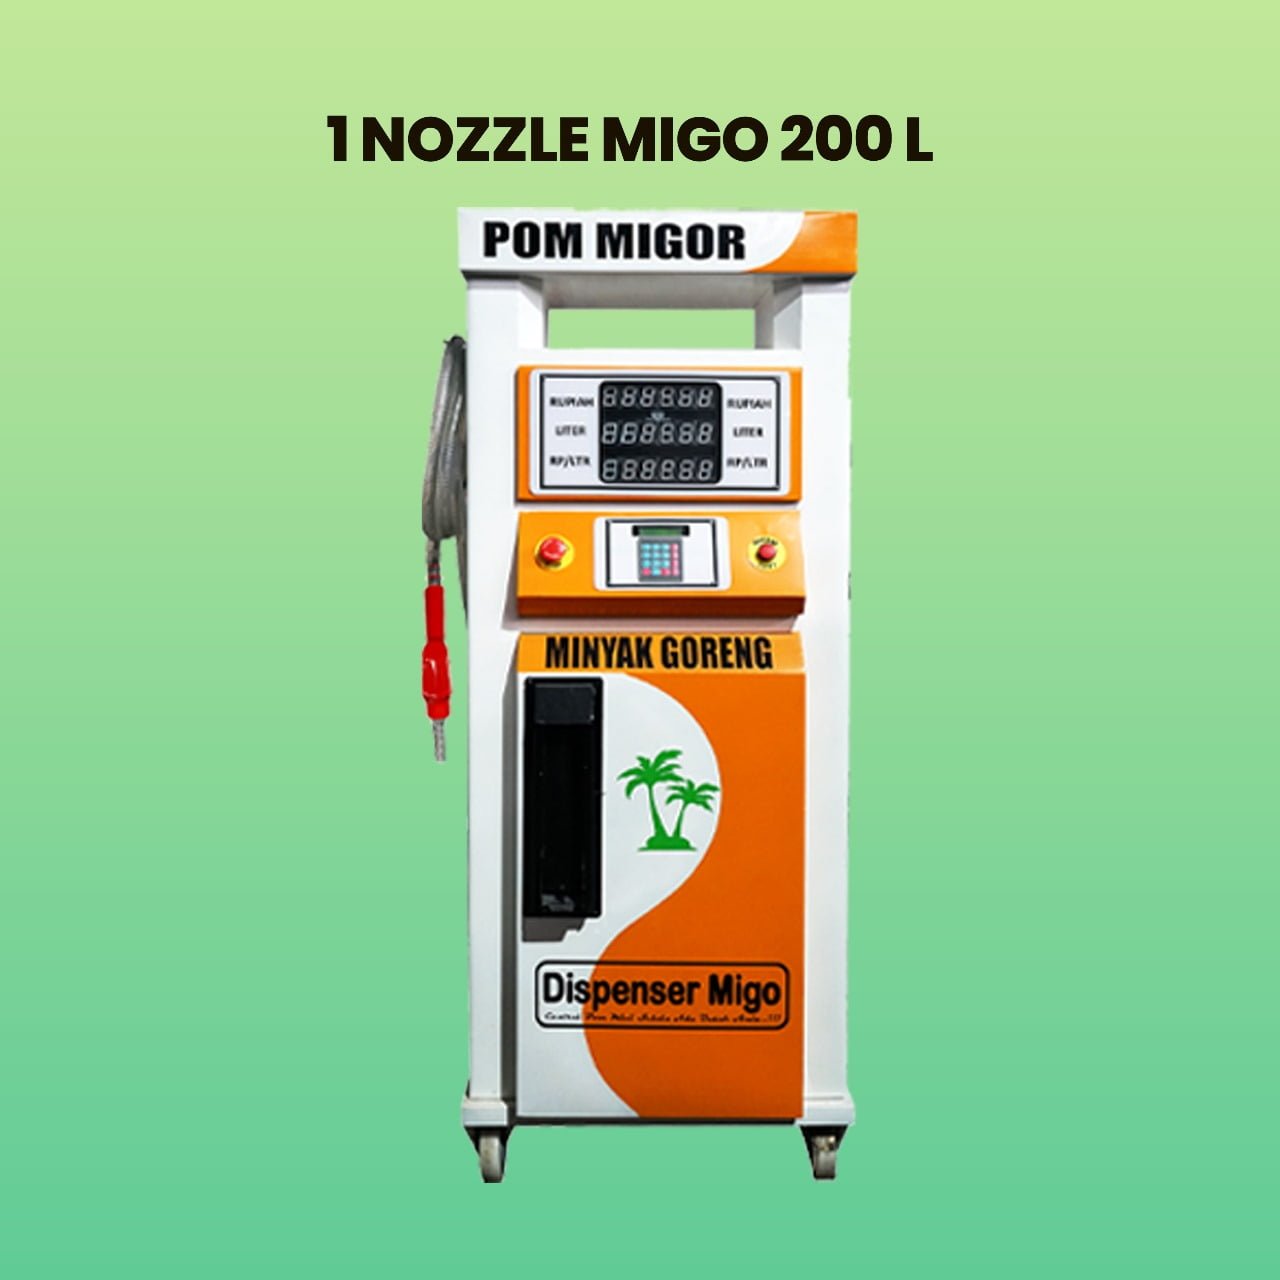 pom_migo_1_nozzle_200